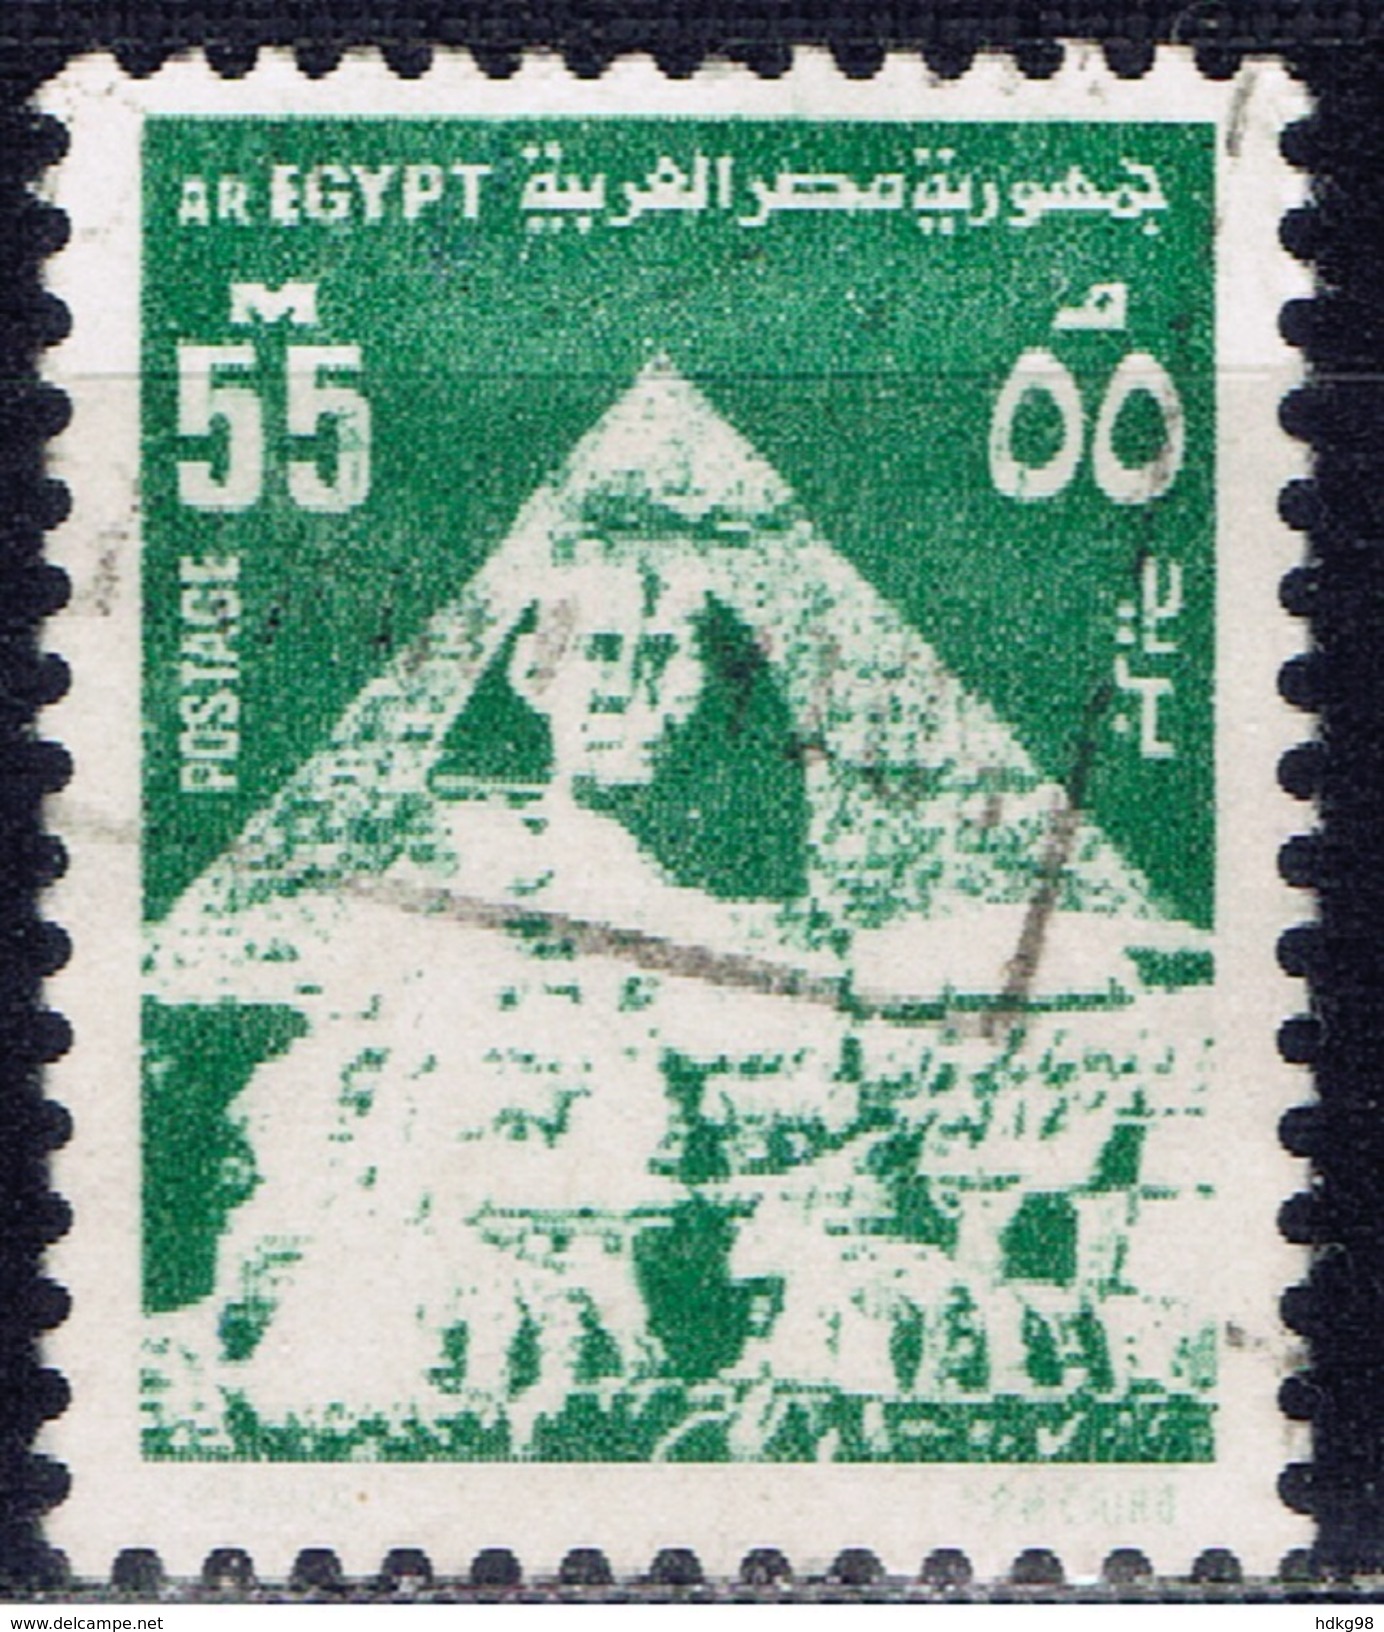 ET+ Ägypten 1974 Mi 633 Sphinx - Oblitérés